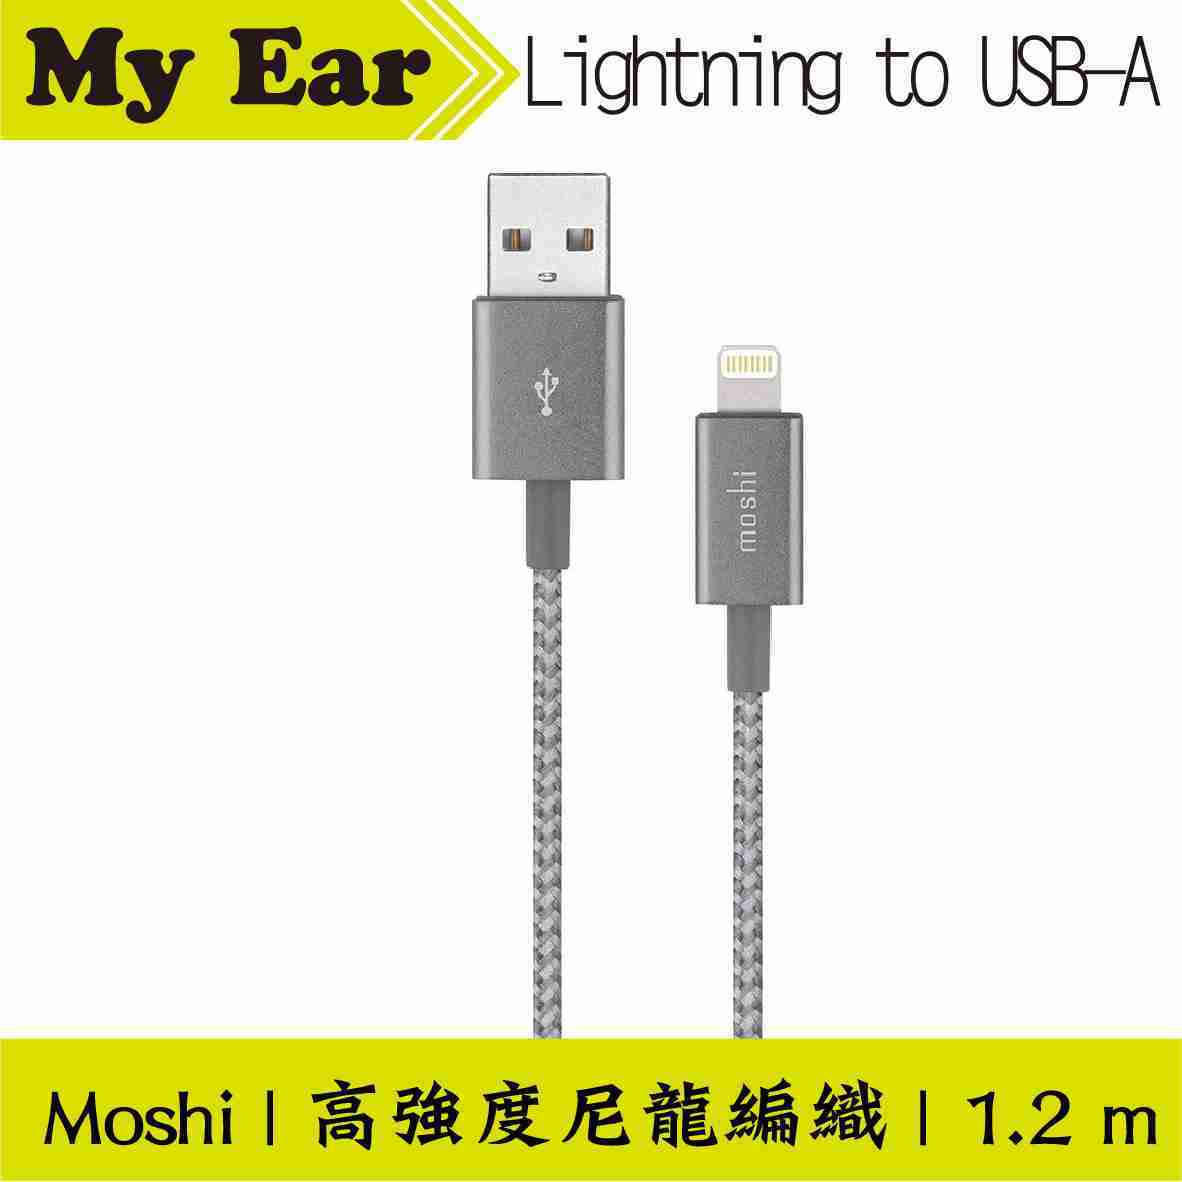 Moshi Integra™強韌系列 Lightning to USB-A 充電線 黑 | My Ear 耳機專門店